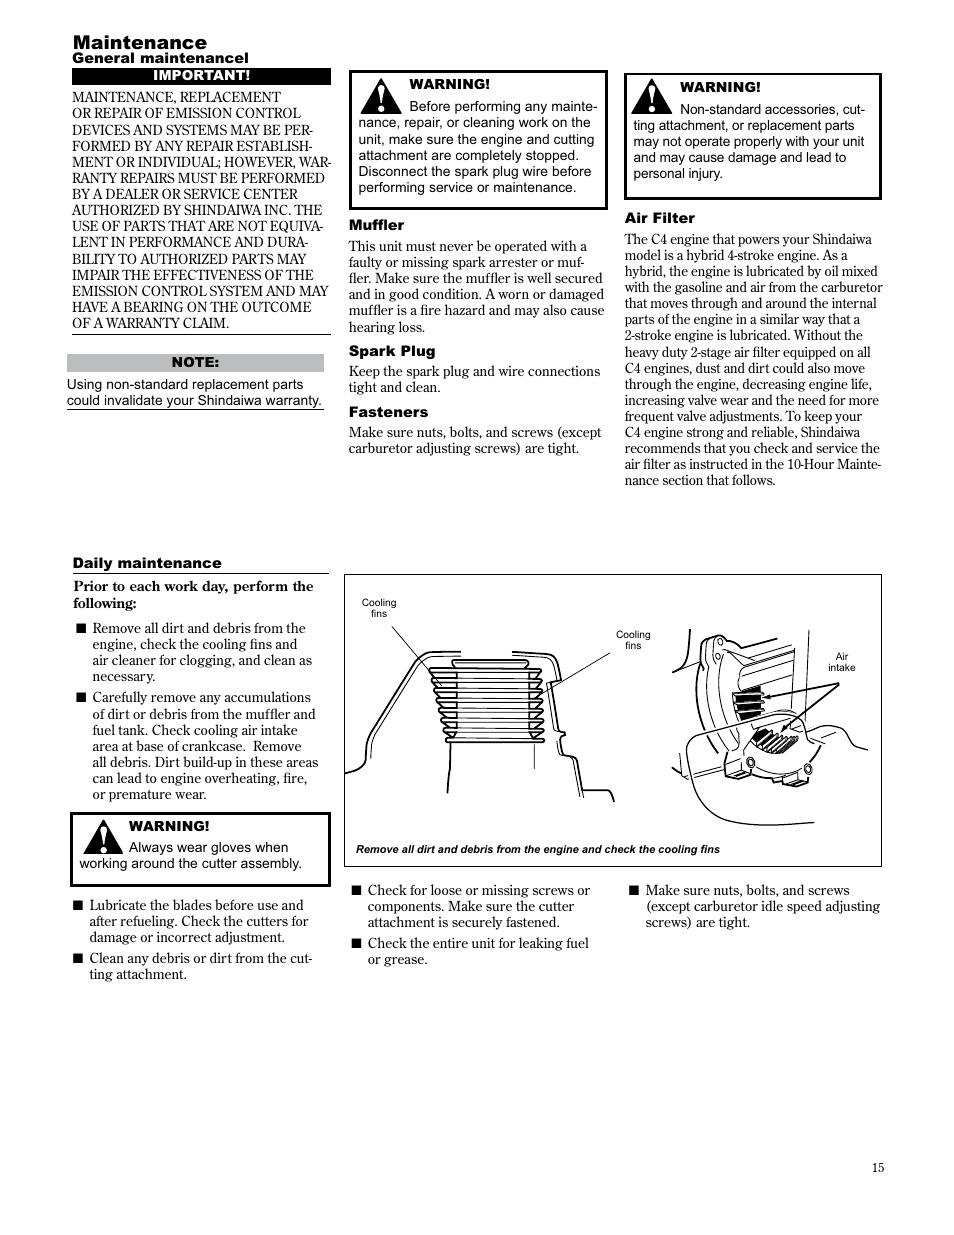 Maintenance | Shindaiwa 89304 User Manual | Page 15 / 72